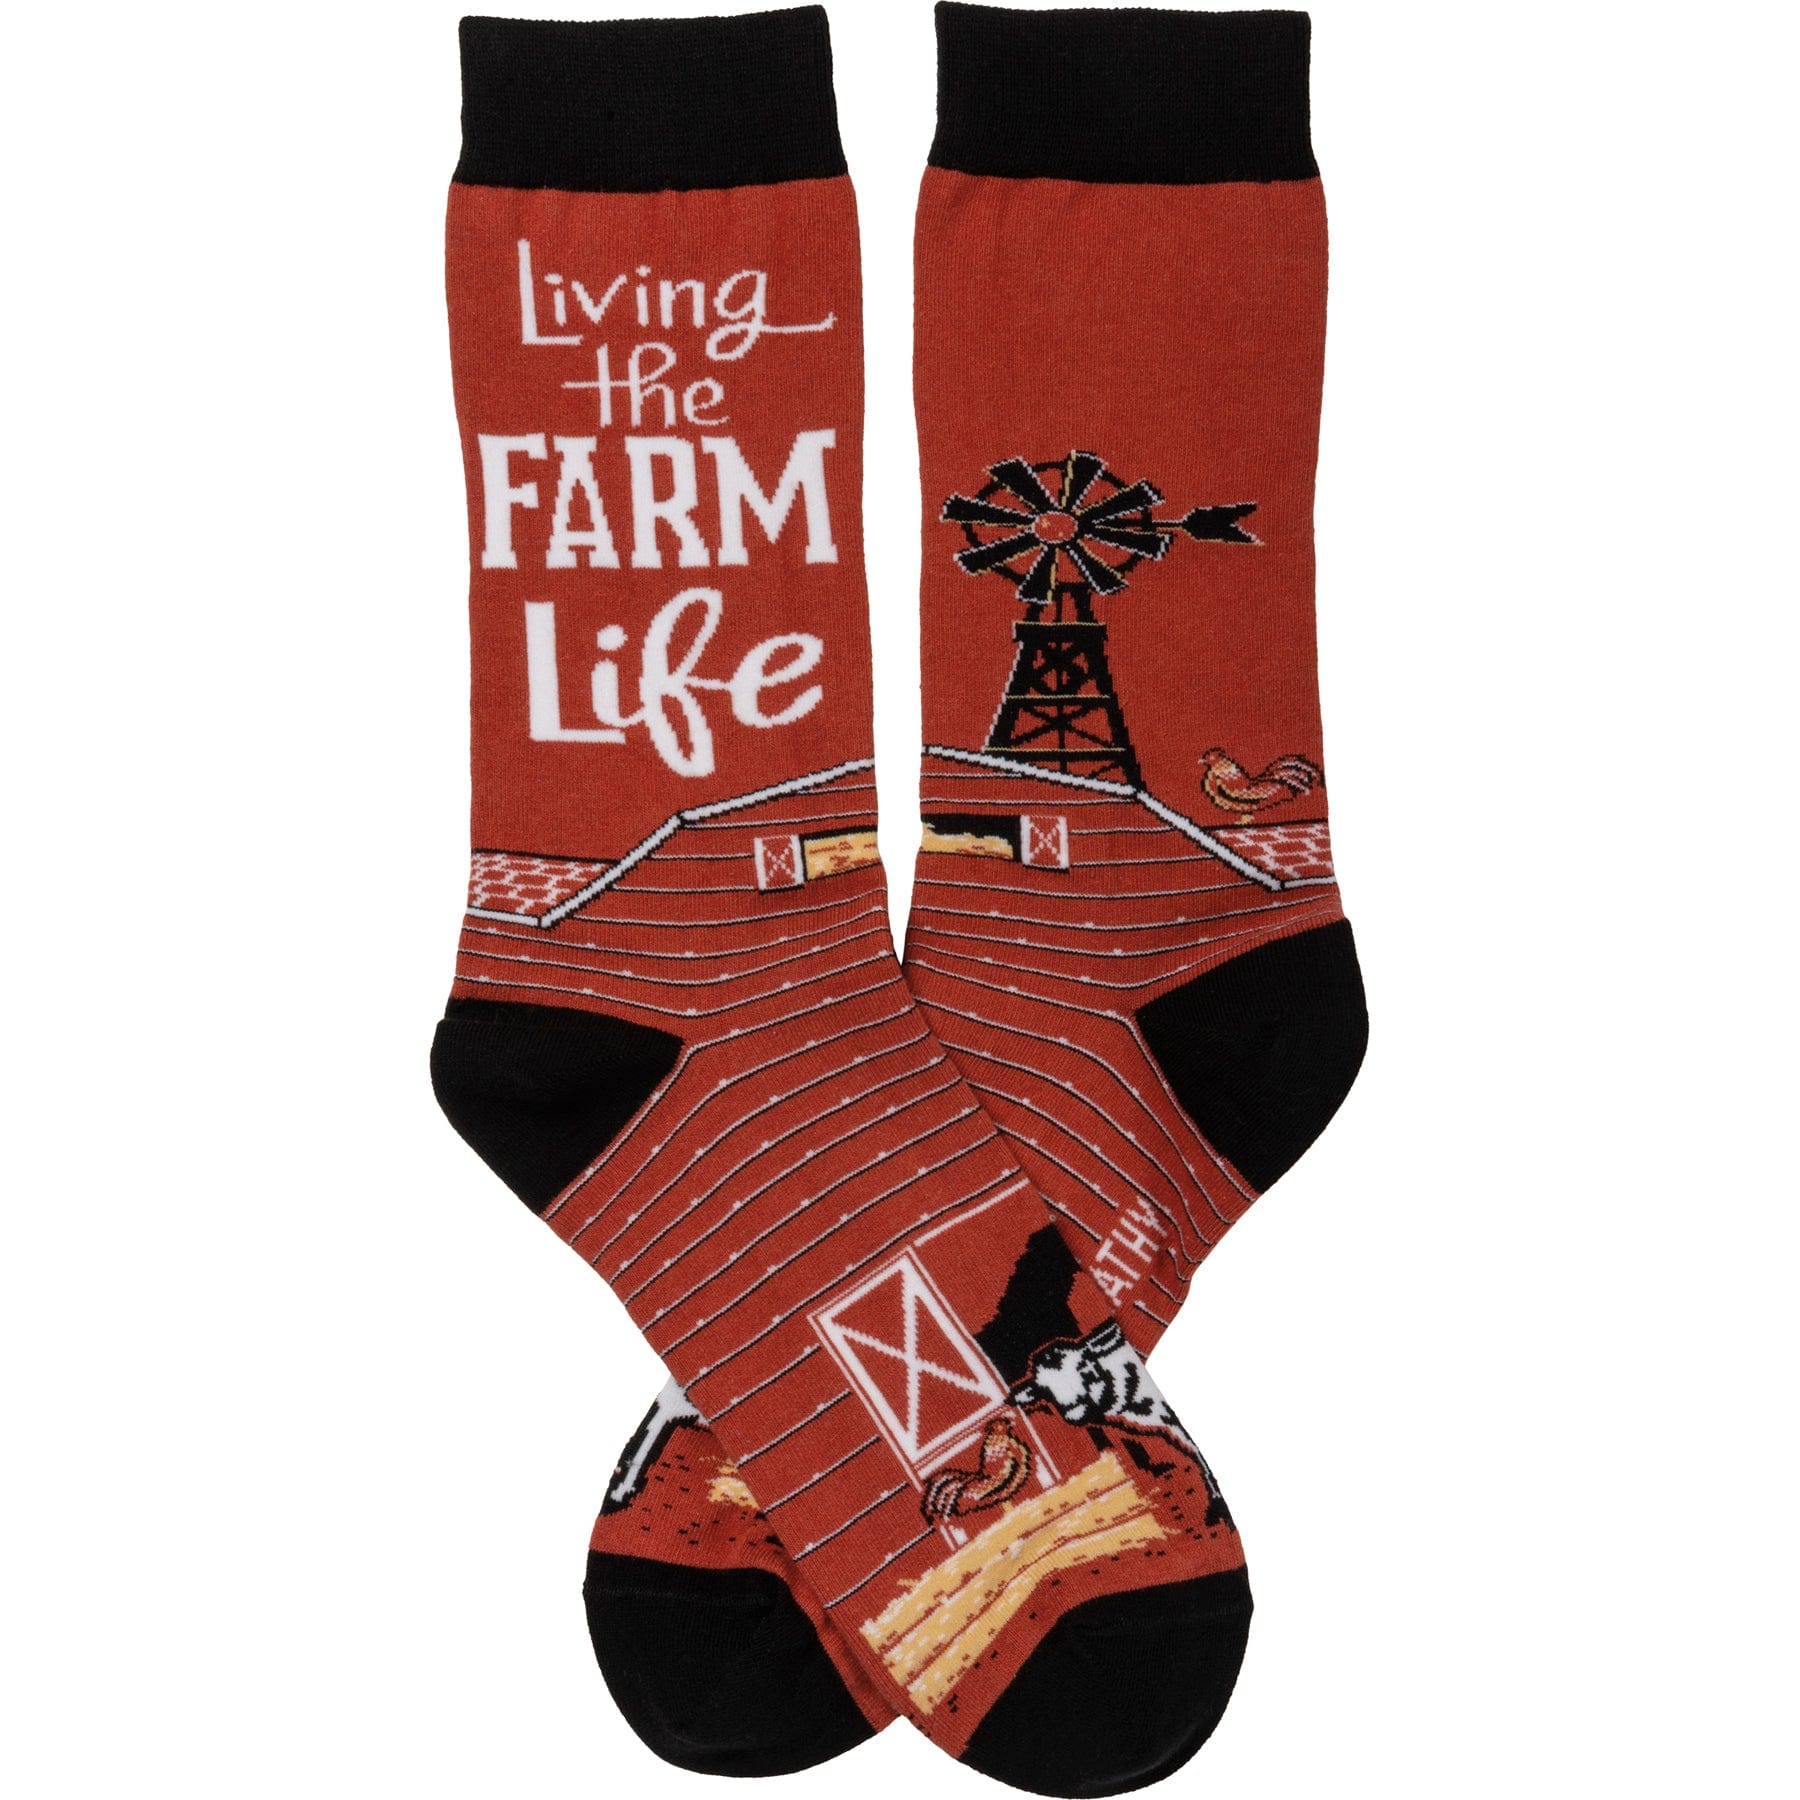 Socks One Size Fits Most Socks - Living The Farm Life PBK-107203